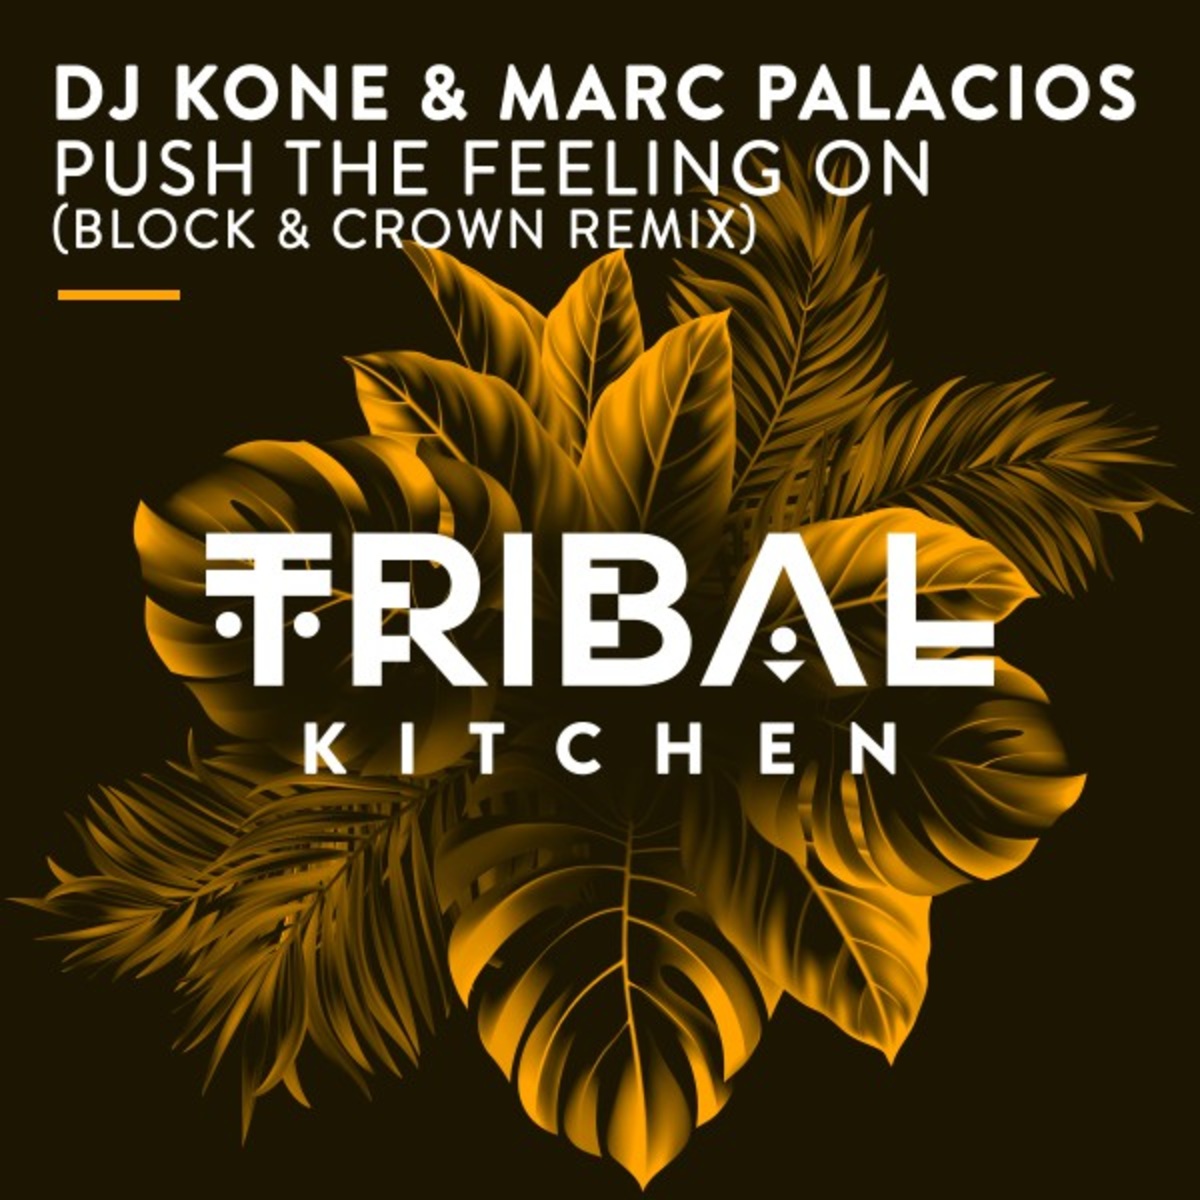 Dj Kone & Marc Palacios - Push the Feeling On (Block & Crown Remix) / Tribal Kitchen